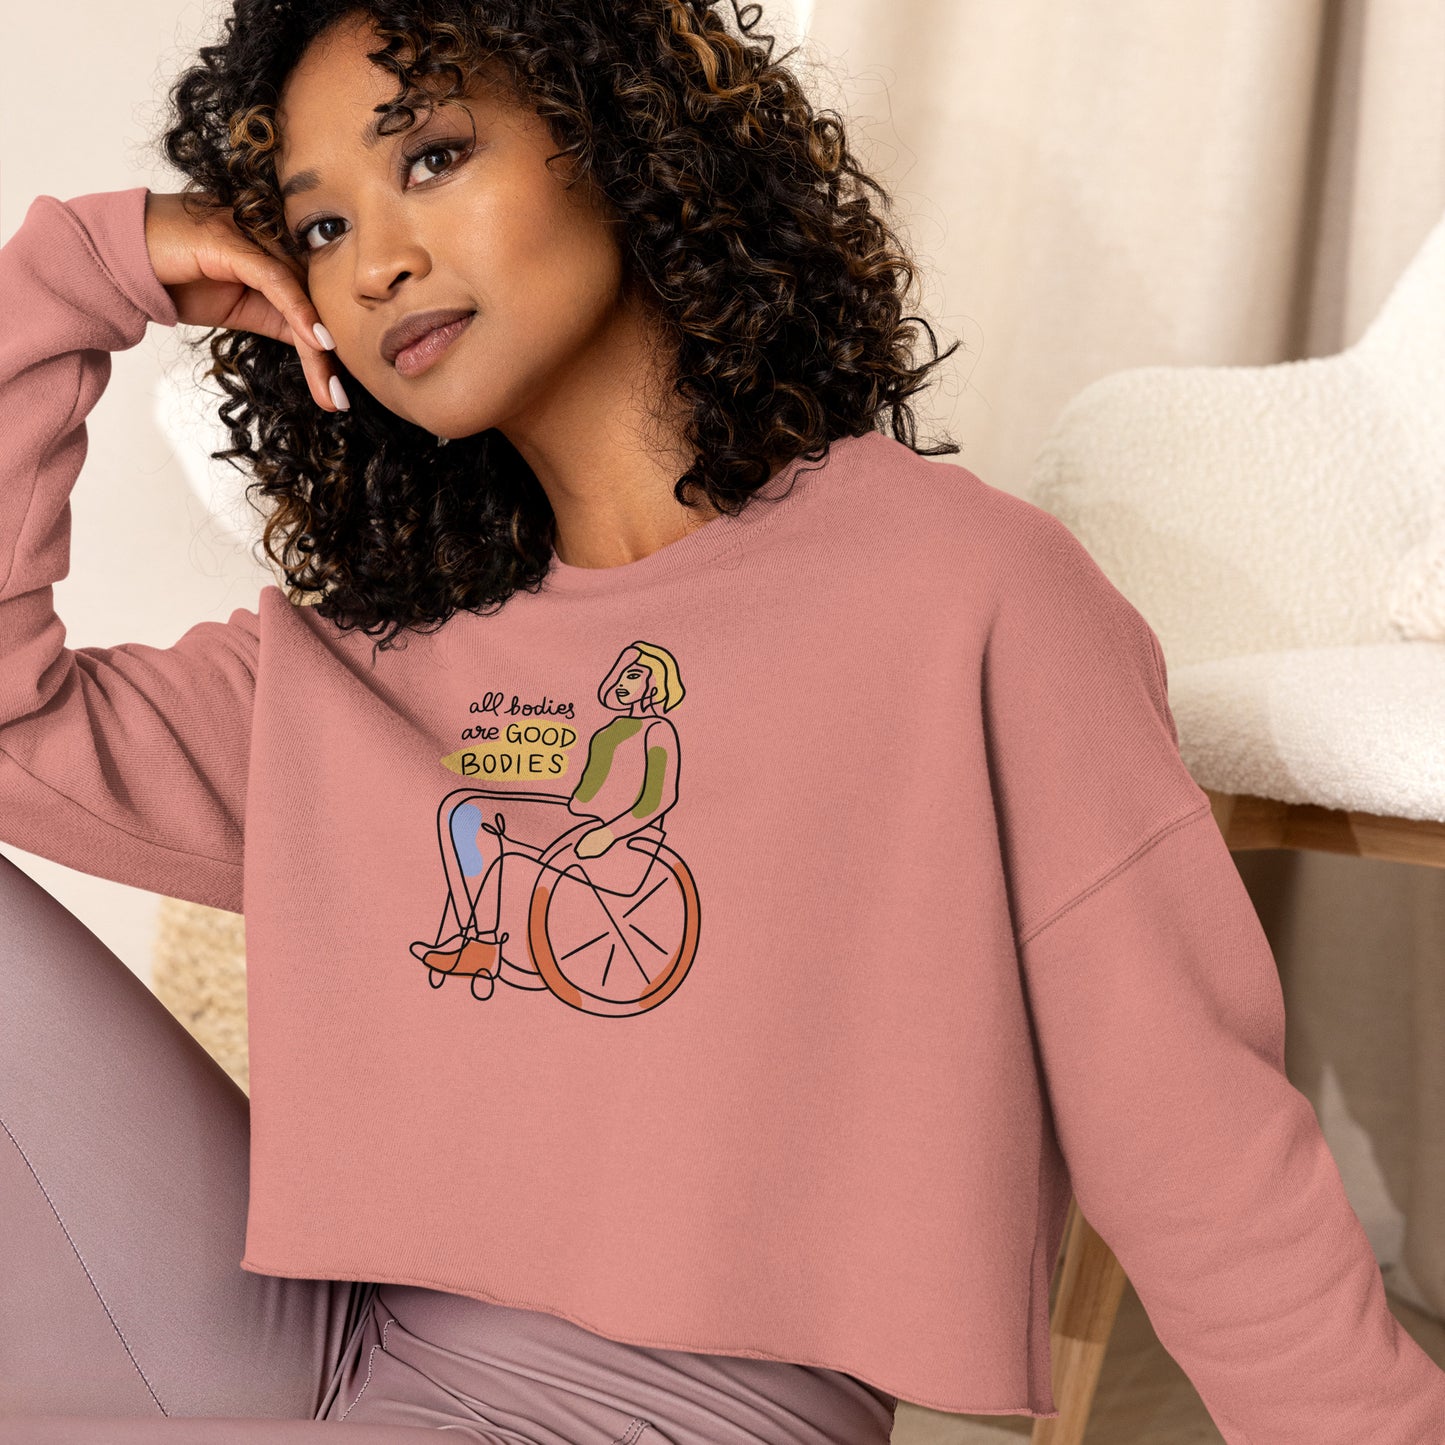 Crop Sweatshirt Womens (All Bodies Are Good Bodies - Inspiration 003)